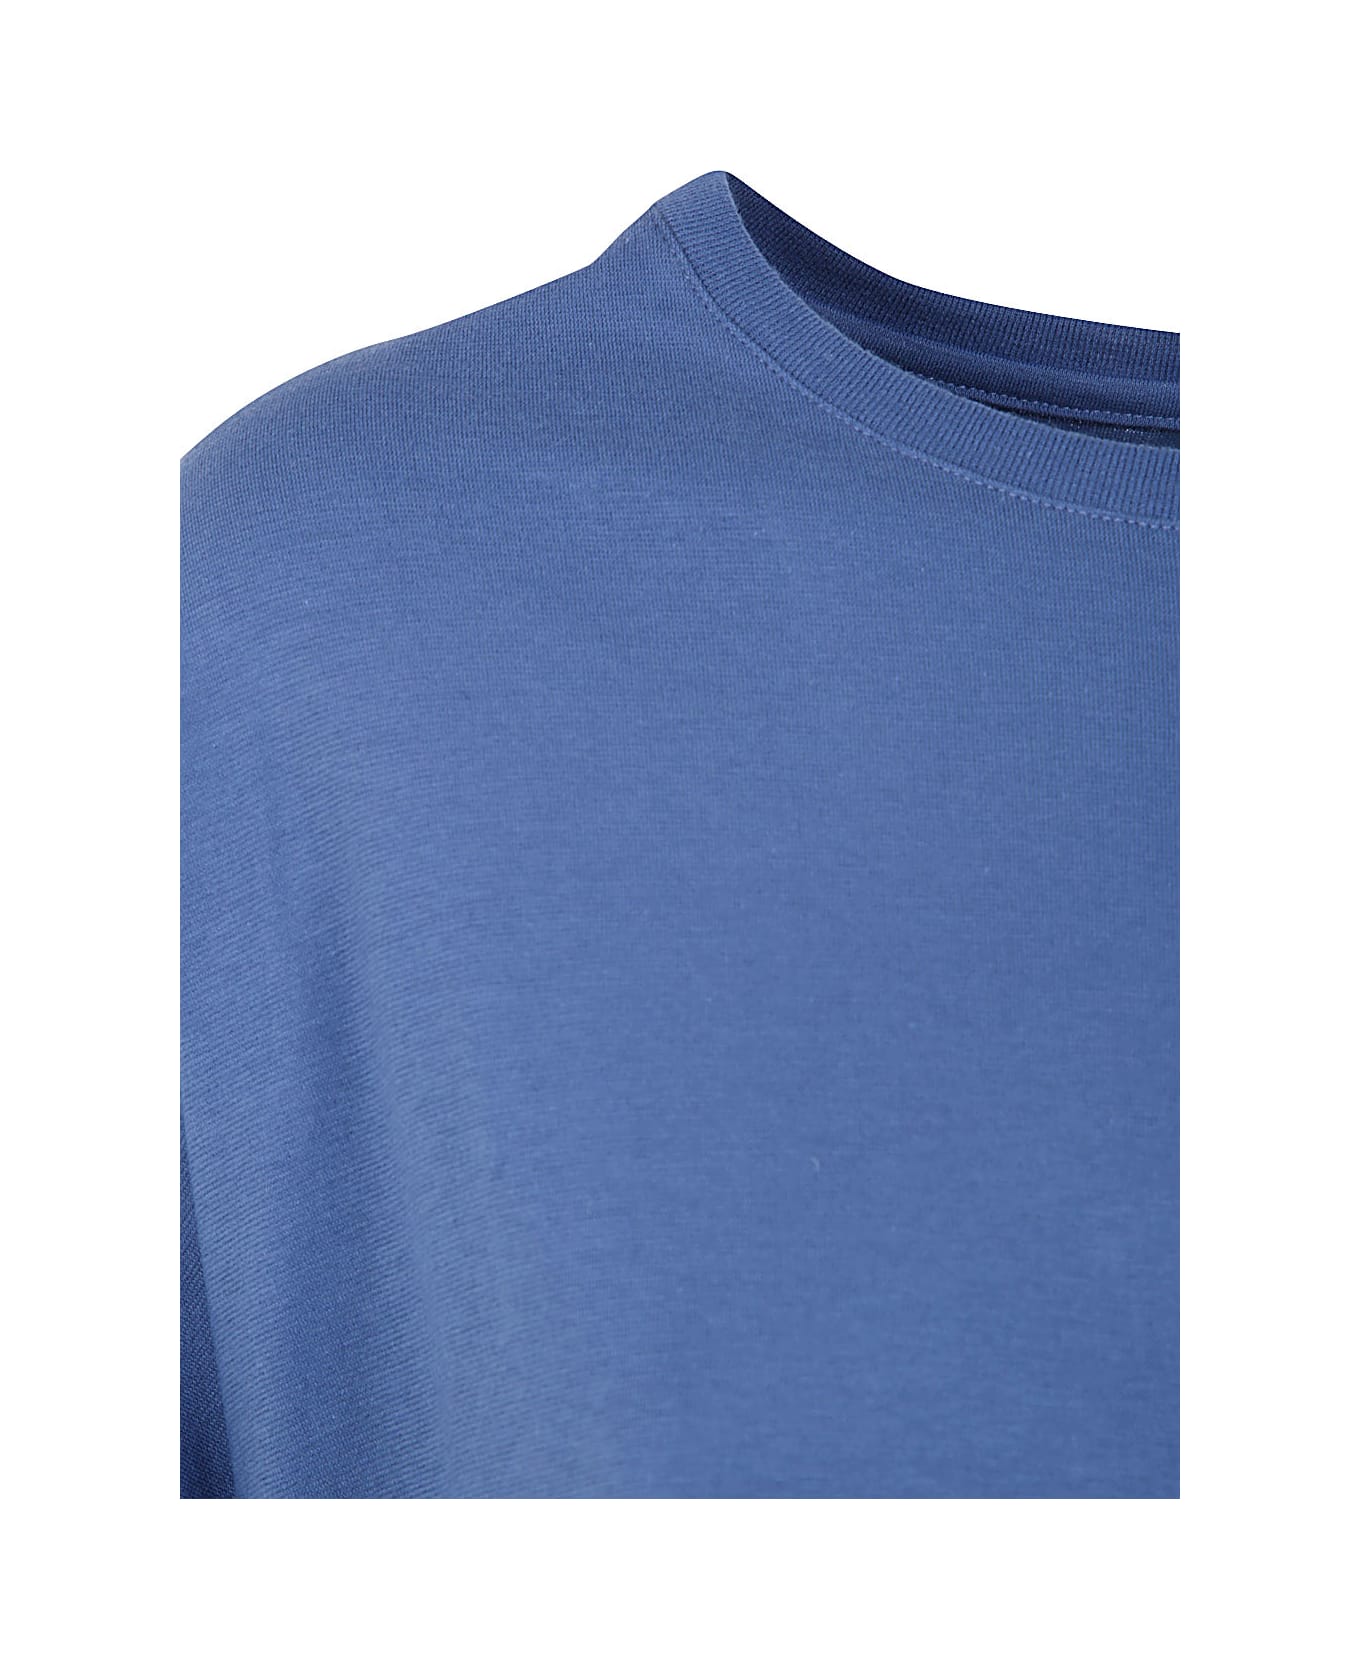 apuntob Short Sleeves Crew Neck Oversize T-shirt - Denim